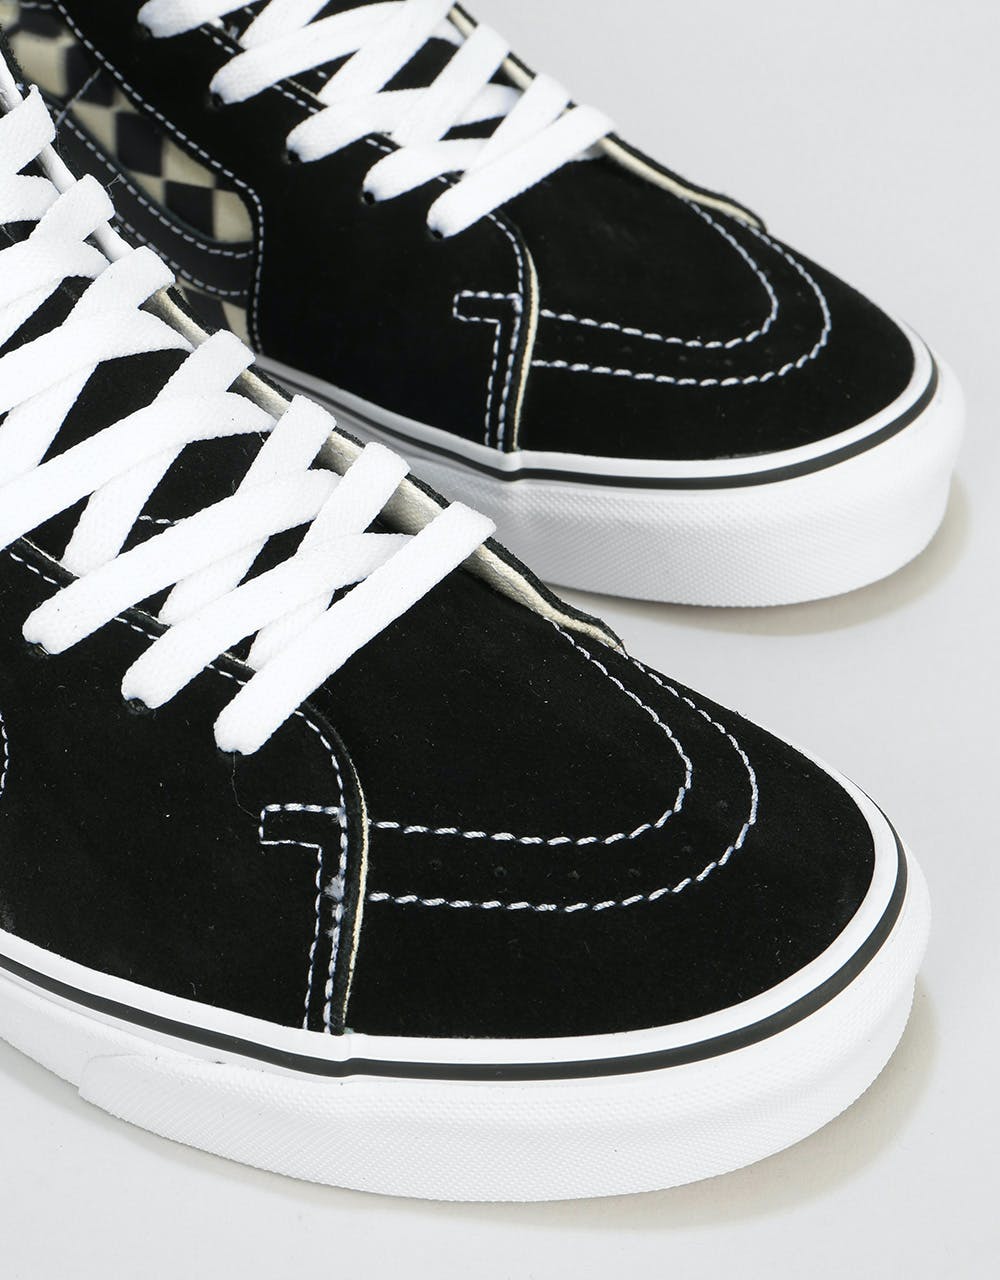 Vans Sk8-Hi Skate Shoes - (Blur Check) Black/Classic White